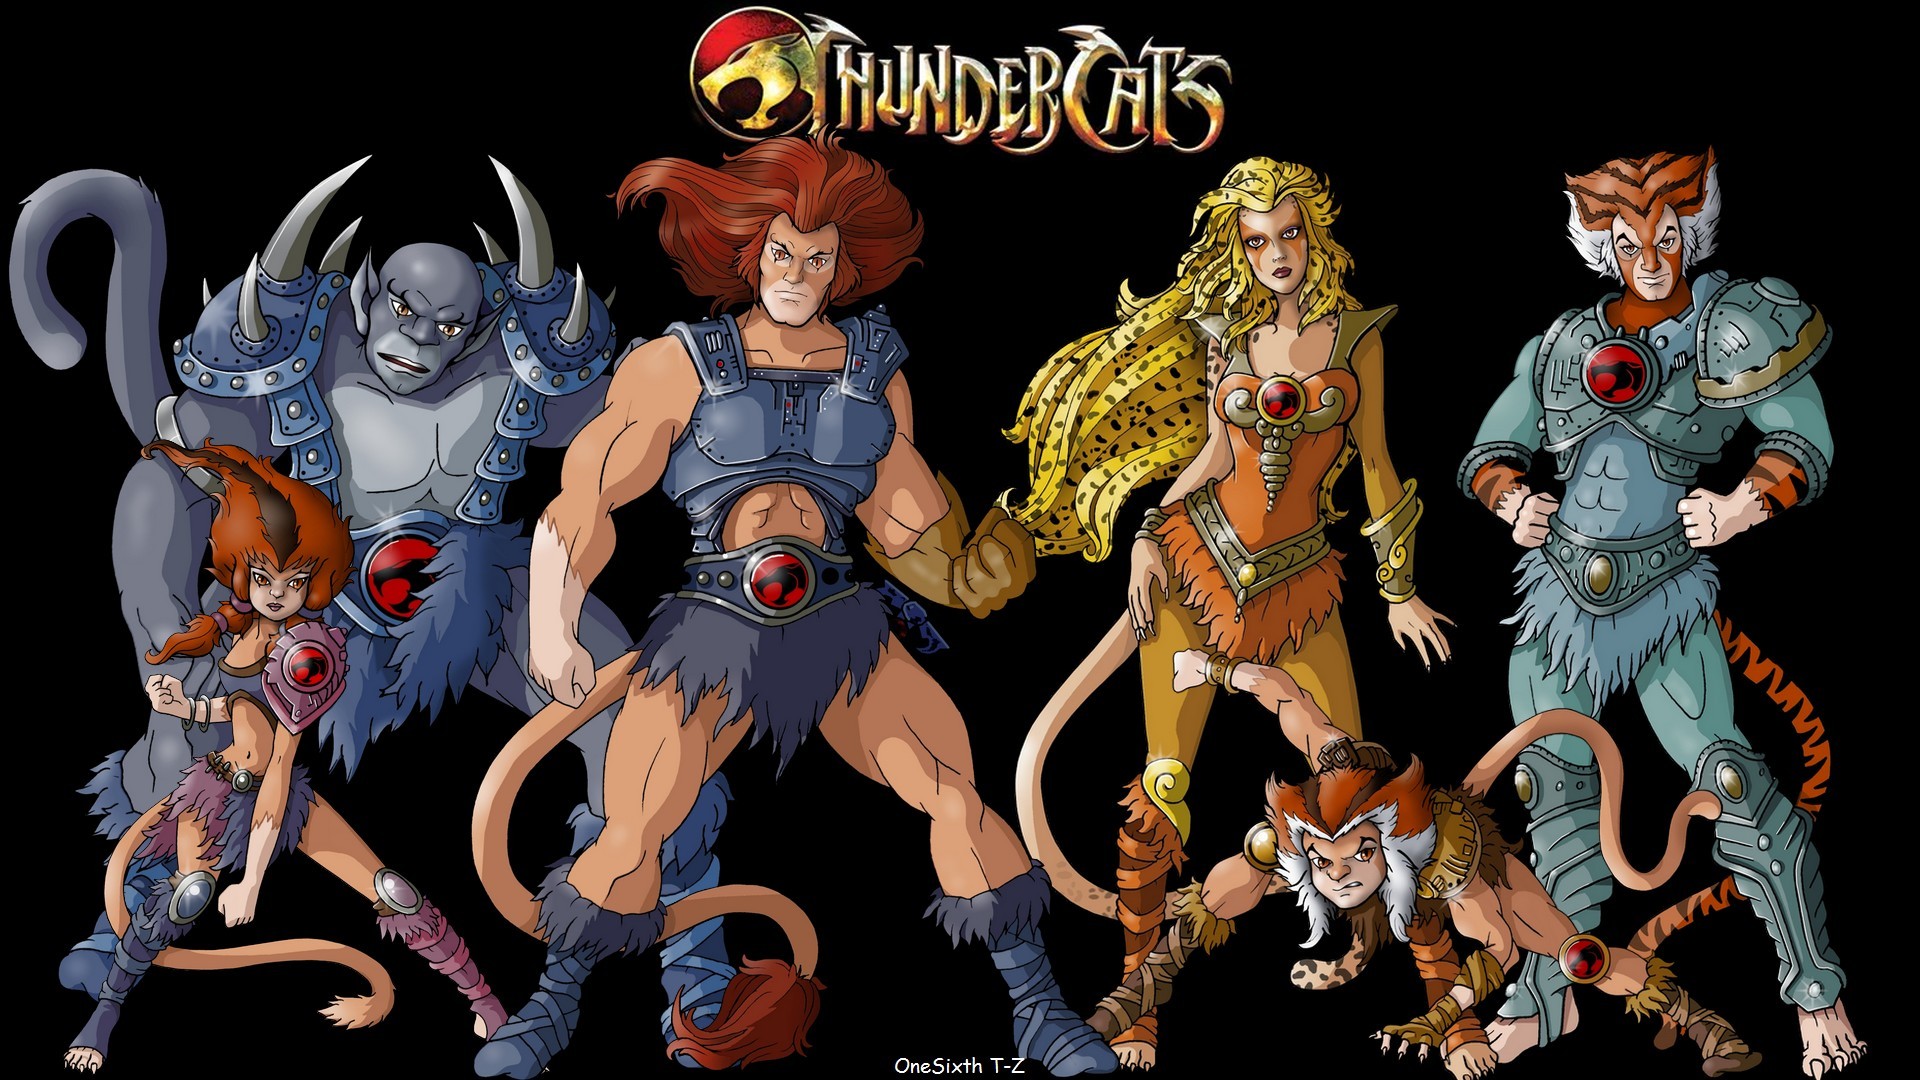 Thundercats Wallpapers Px, - 1080p Thundercats Wallpaper Hd - HD Wallpaper 